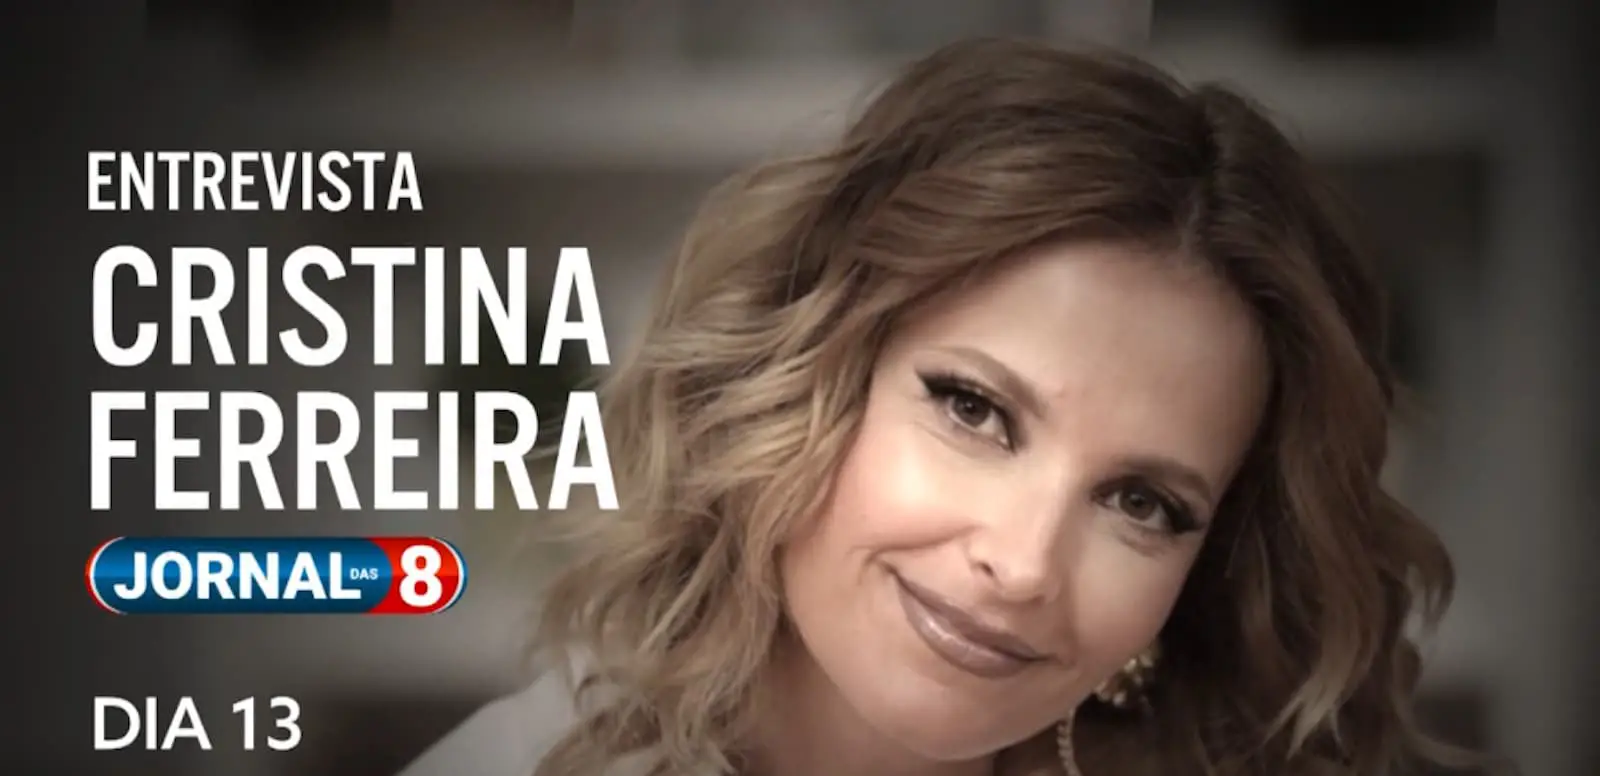 Cristina Ferreira Entrevista Tvi